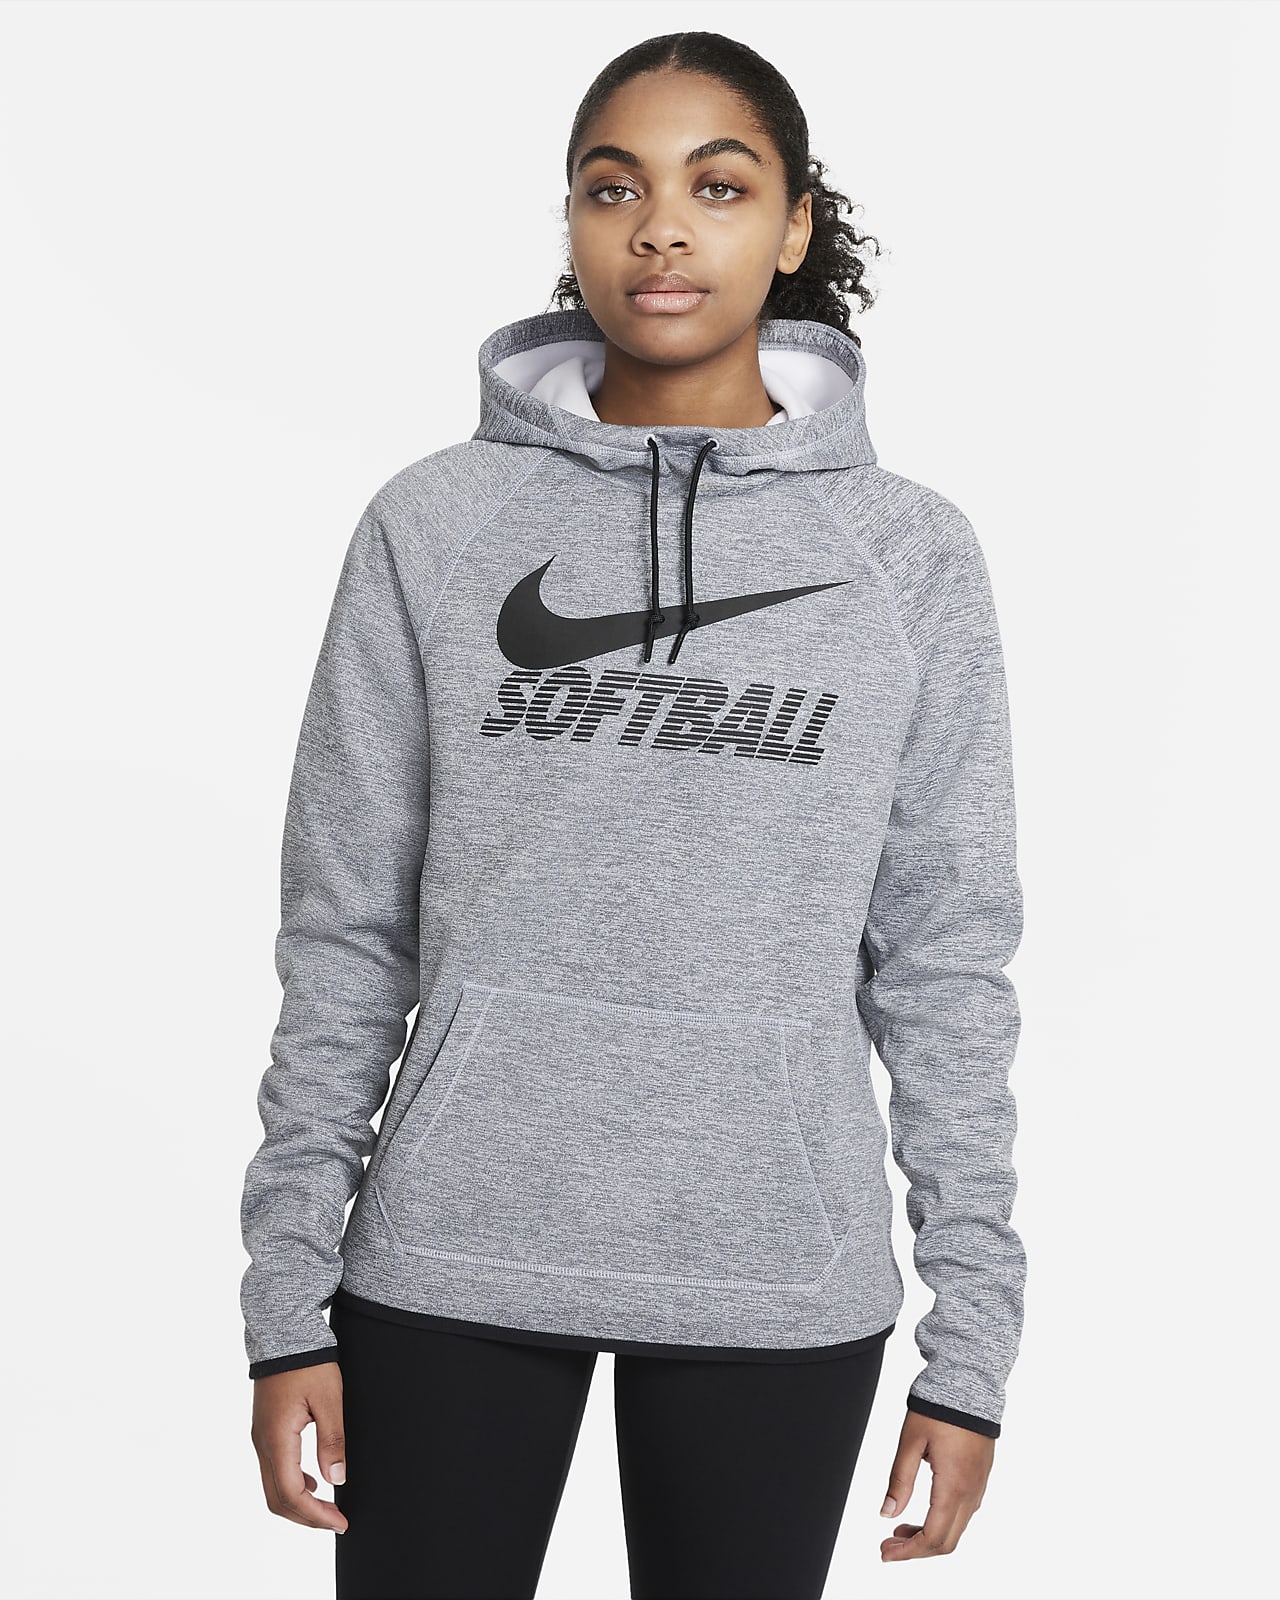 women's nike softball hoodie